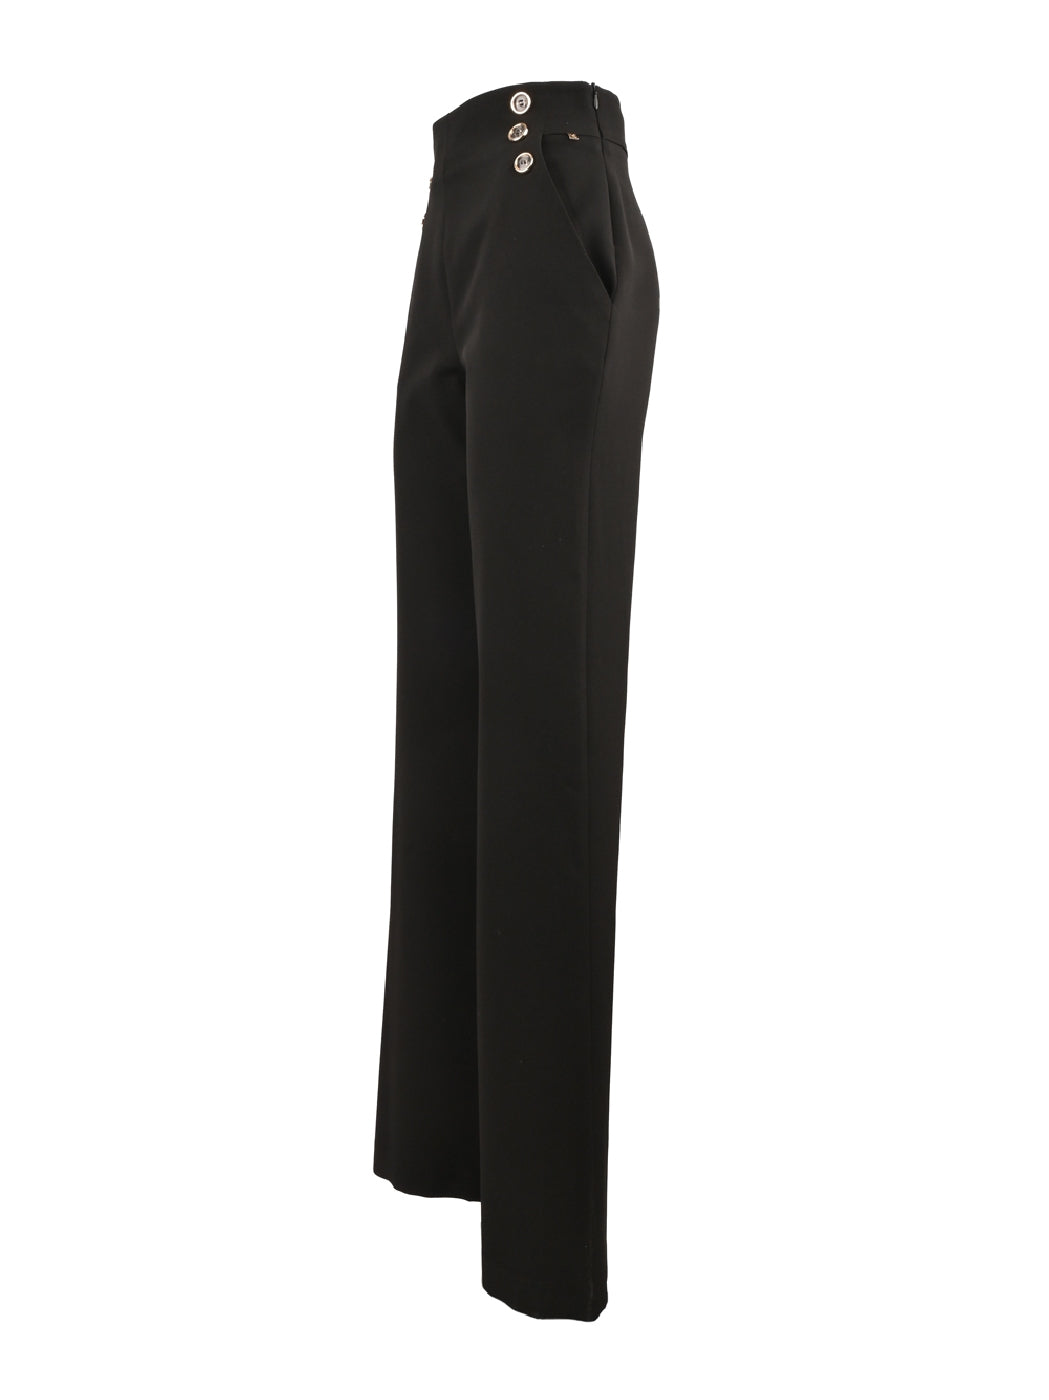 Kocca pantalone nero a vita alta - Premium PANTALONE PALAZZO from KOCCA - Just €130! Shop now at Amaltea